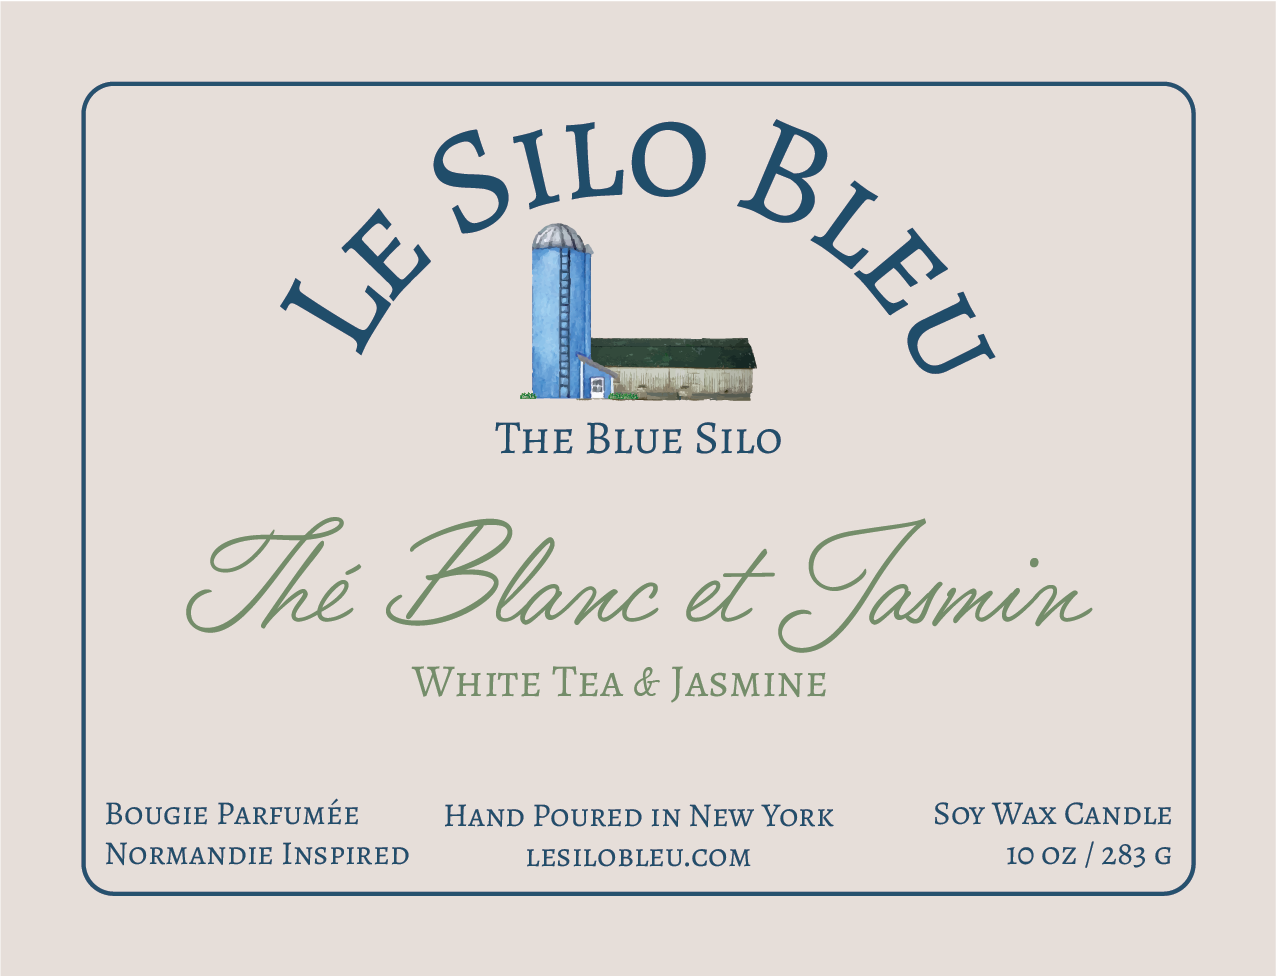 Label for The Blanc et Jasmin - White Tea and Jasmine